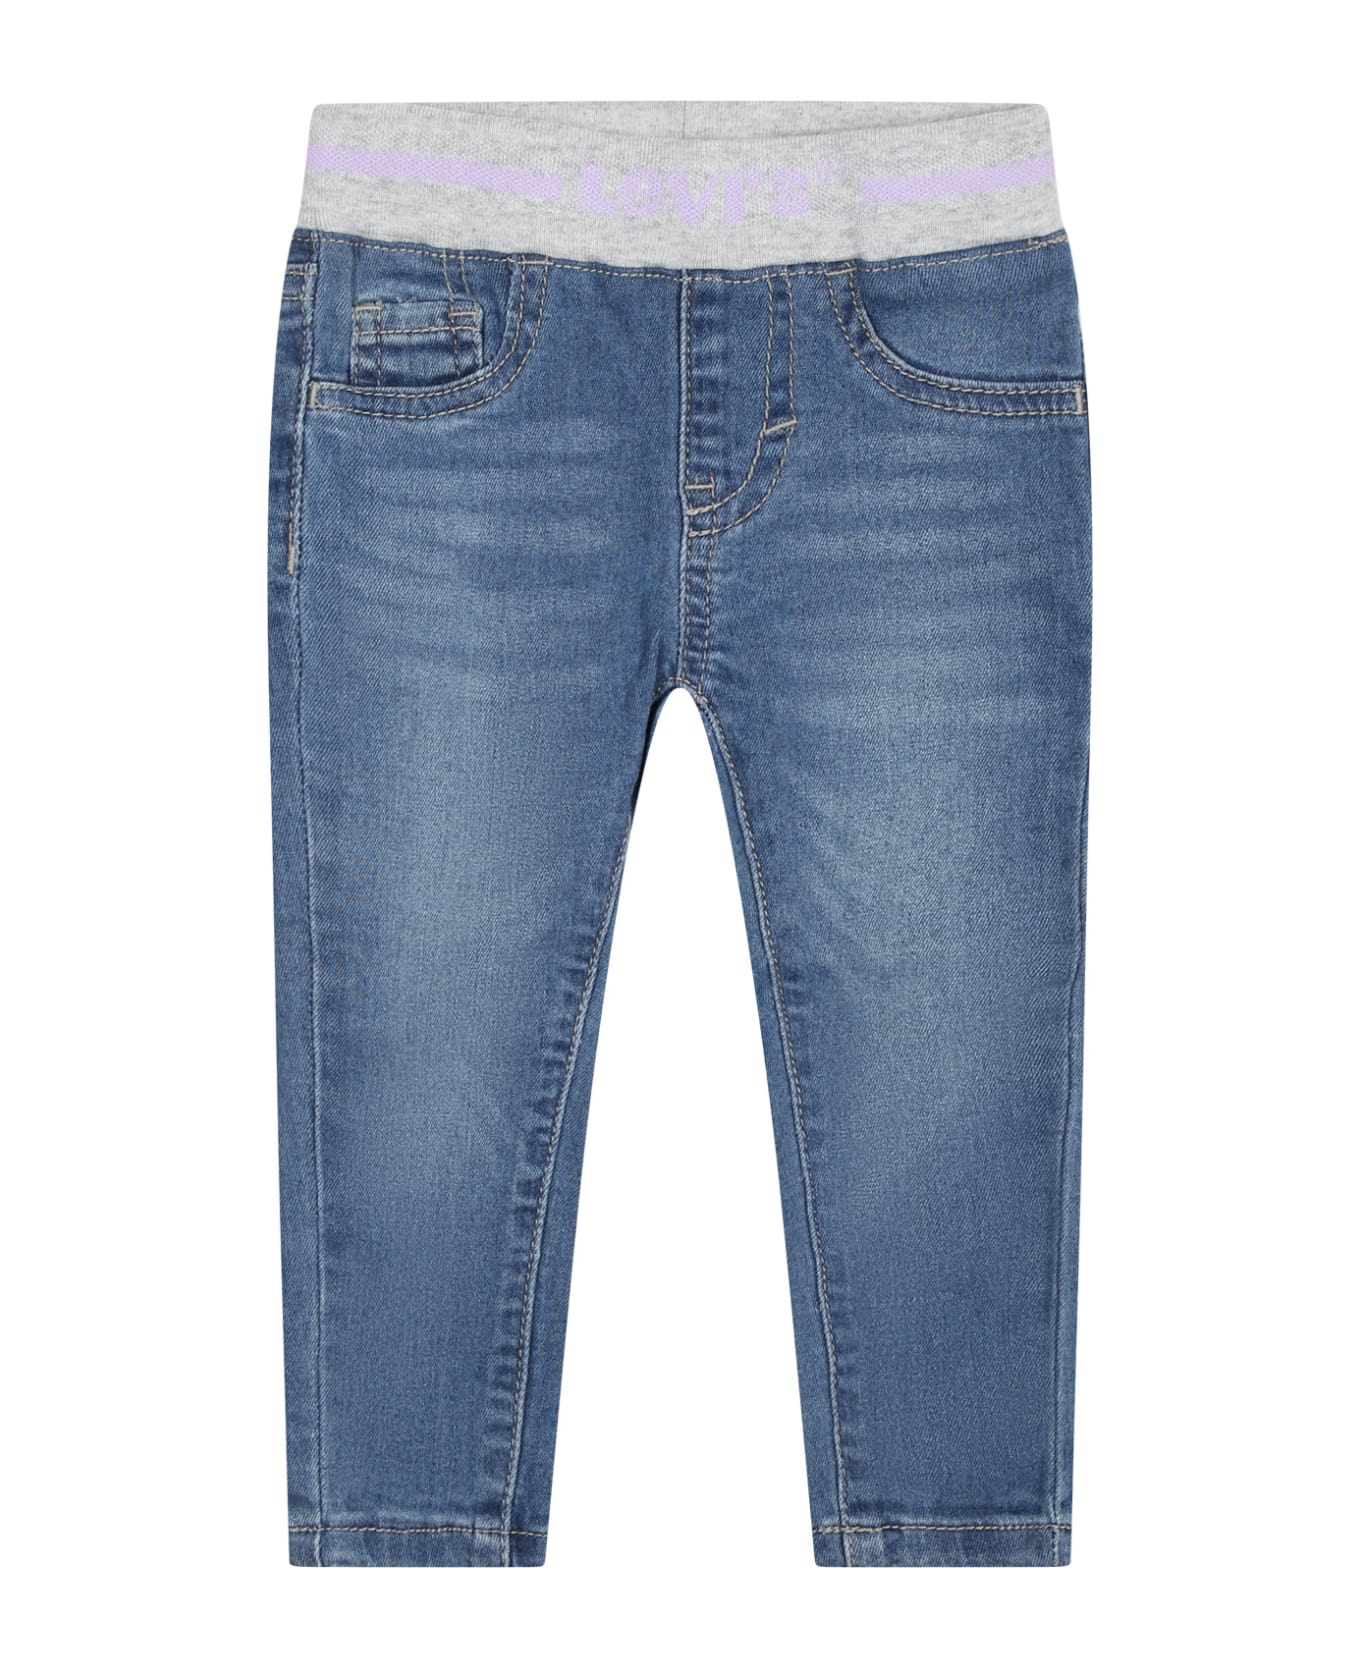 Levi's Denim Jeans For Baby Boy With Logo Patch - Denim